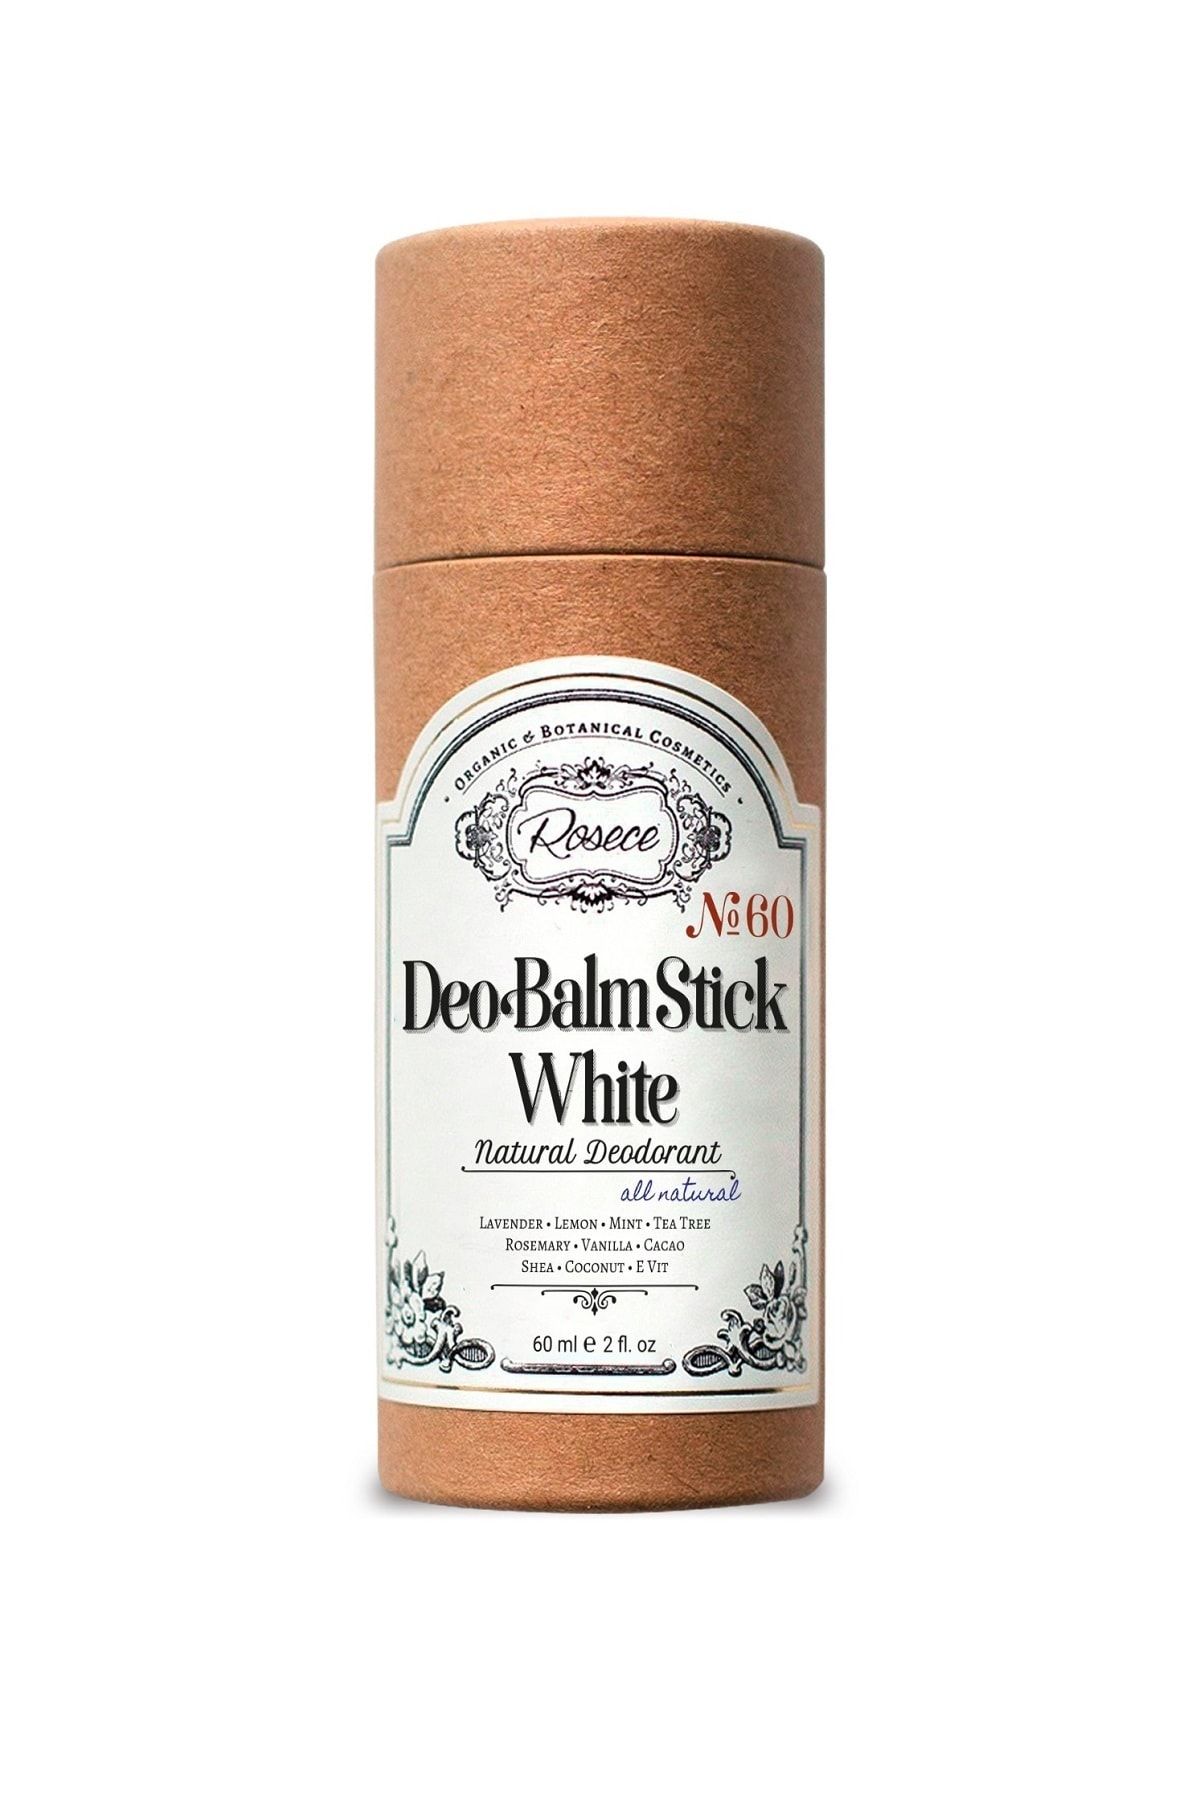 Rosece Naturel Deodorant / Deo Balm Stick / White